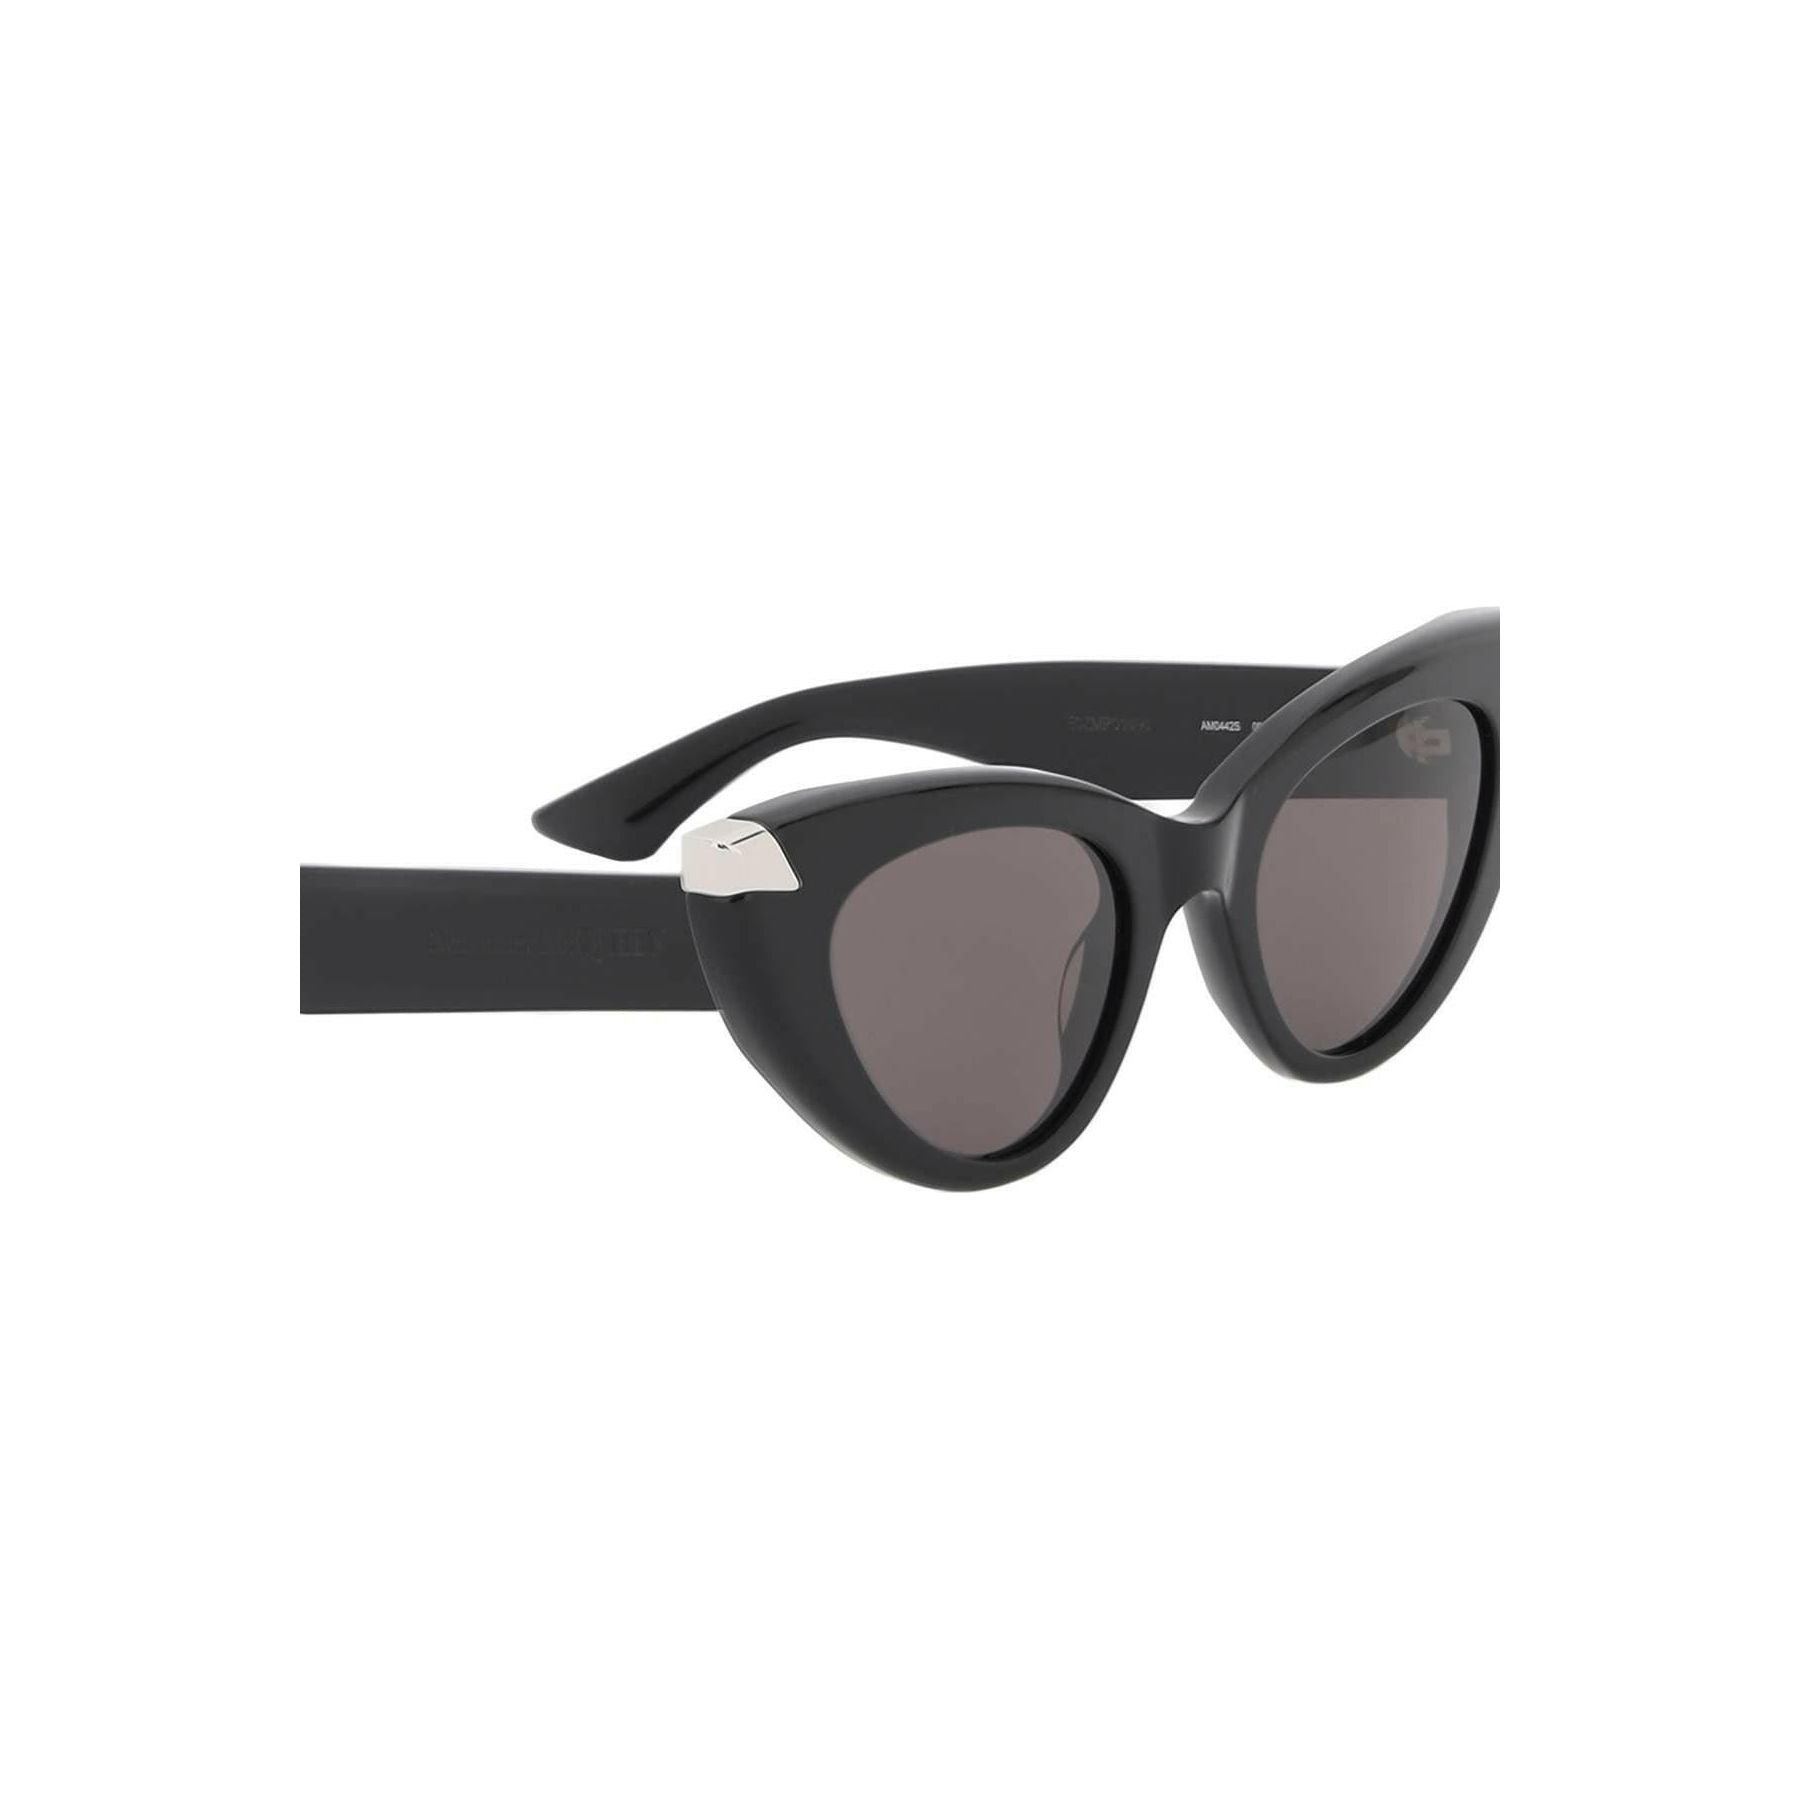 Punk Rivet Cat-Eye Sunglasses in Black/Smoke ALEXANDER MCQUEEN JOHN JULIA.